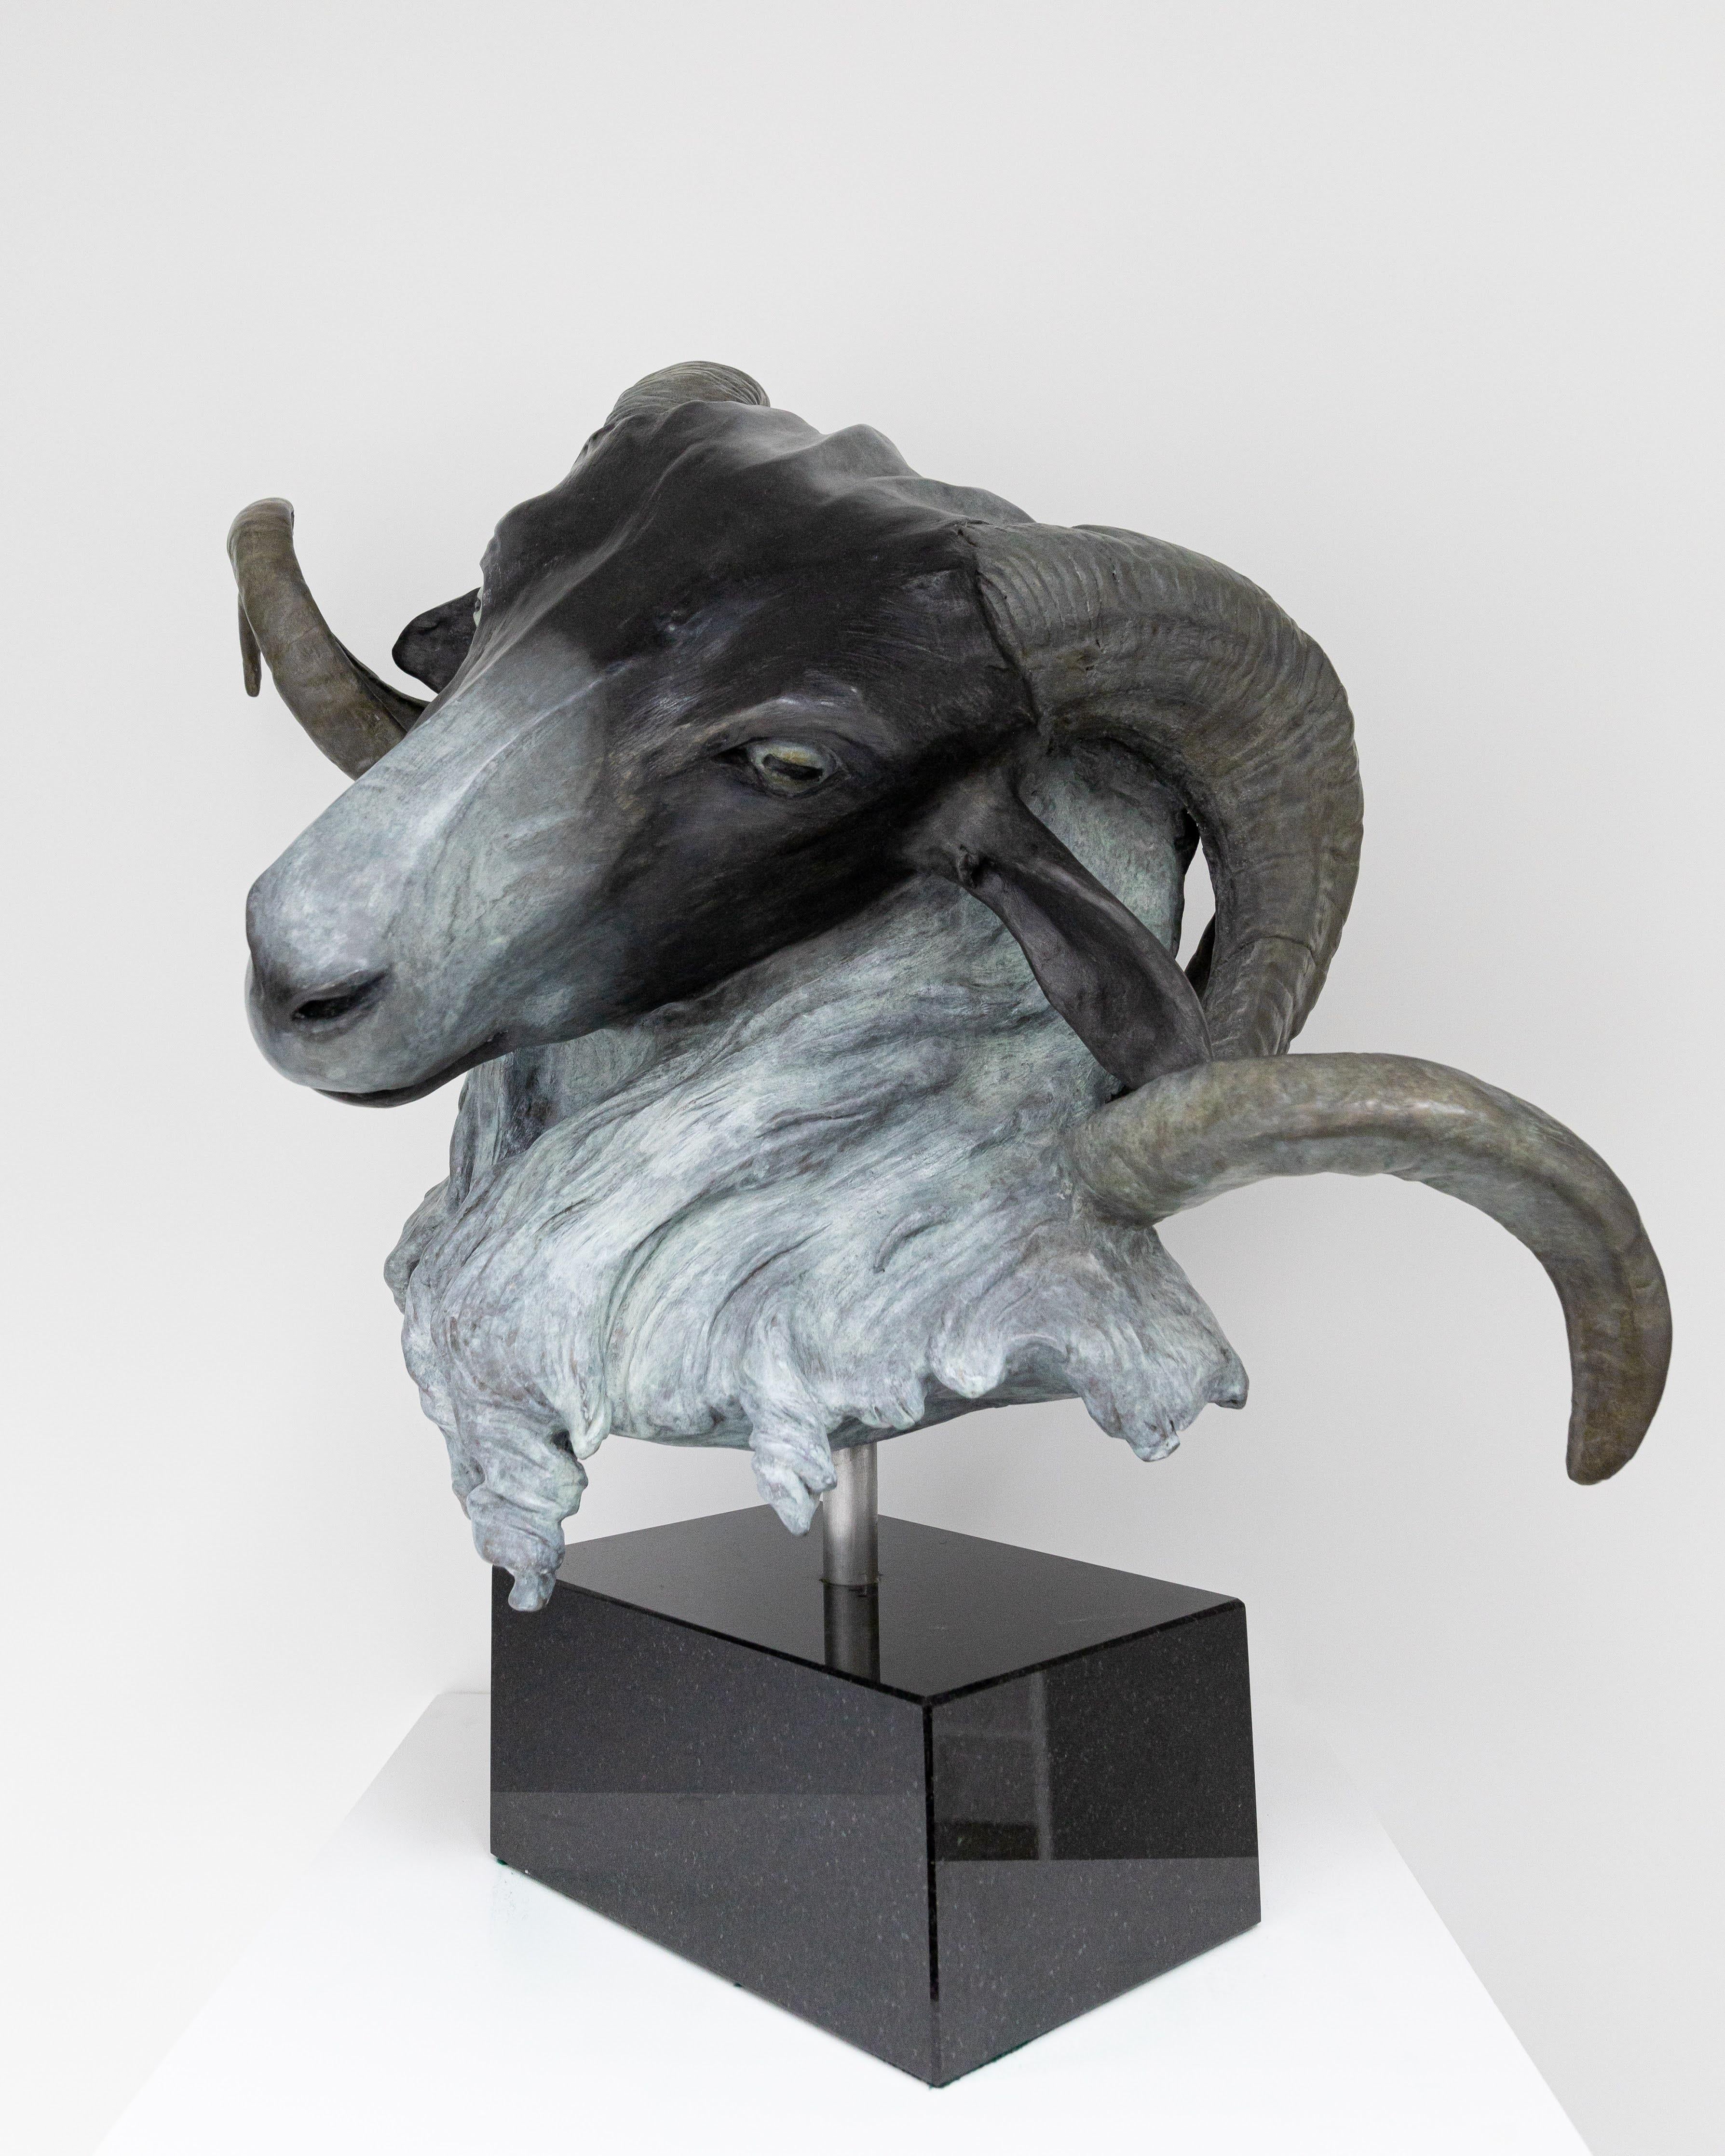 Scottish Blackface Ram (Ovis Aries) - Sculpture by Barry Davies